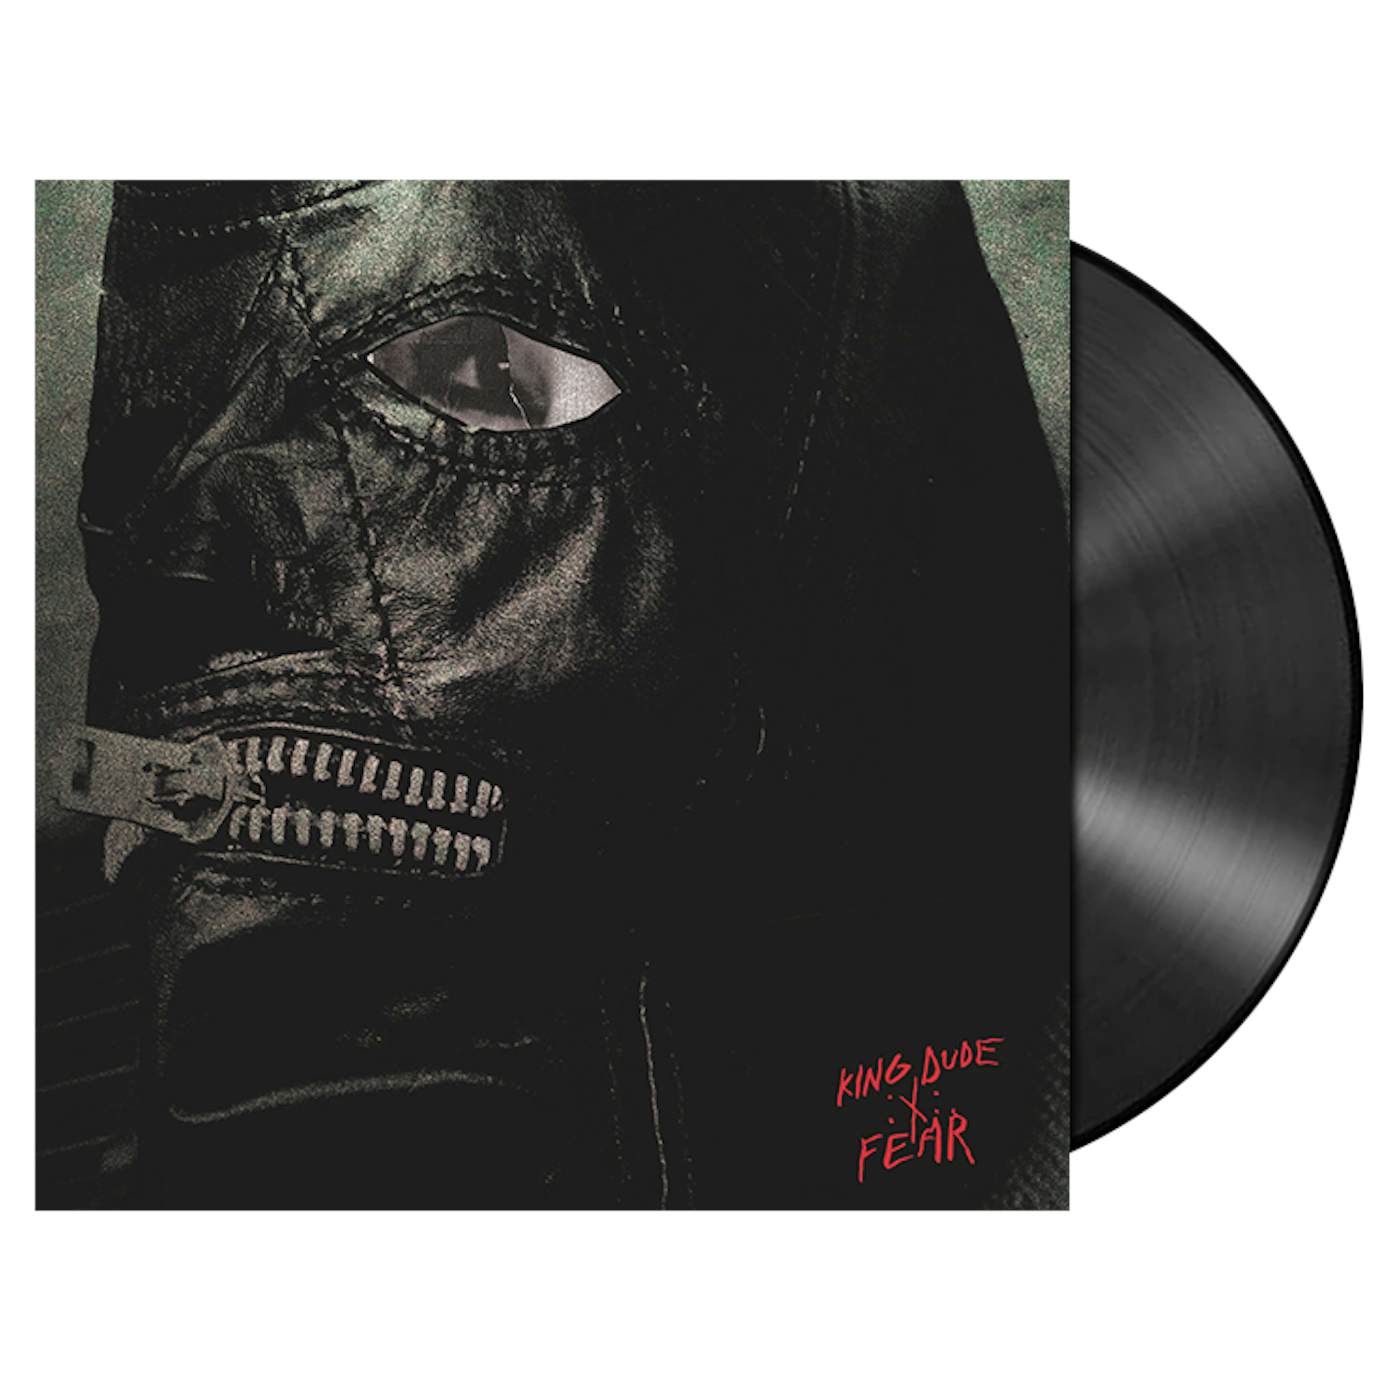 KING DUDE - 'Fear' LP (Vinyl)